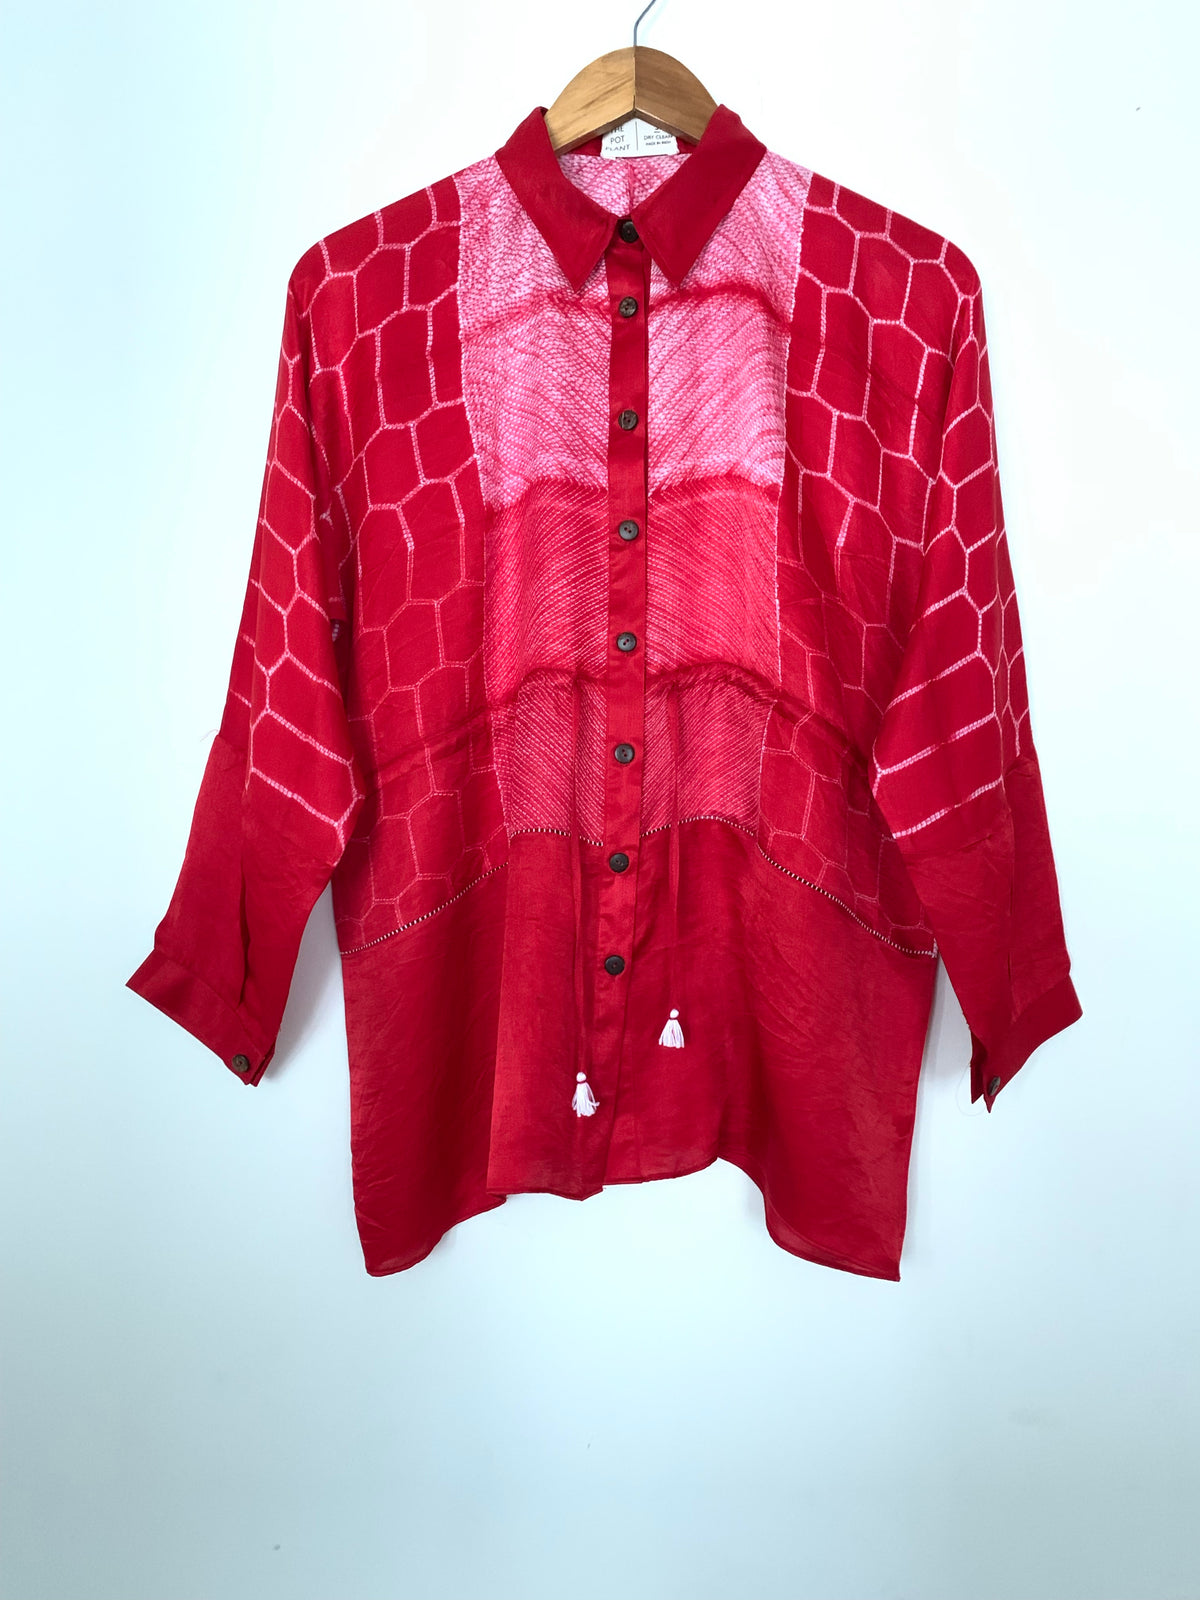 Red Cotton Silk Shibori Drawstring Top